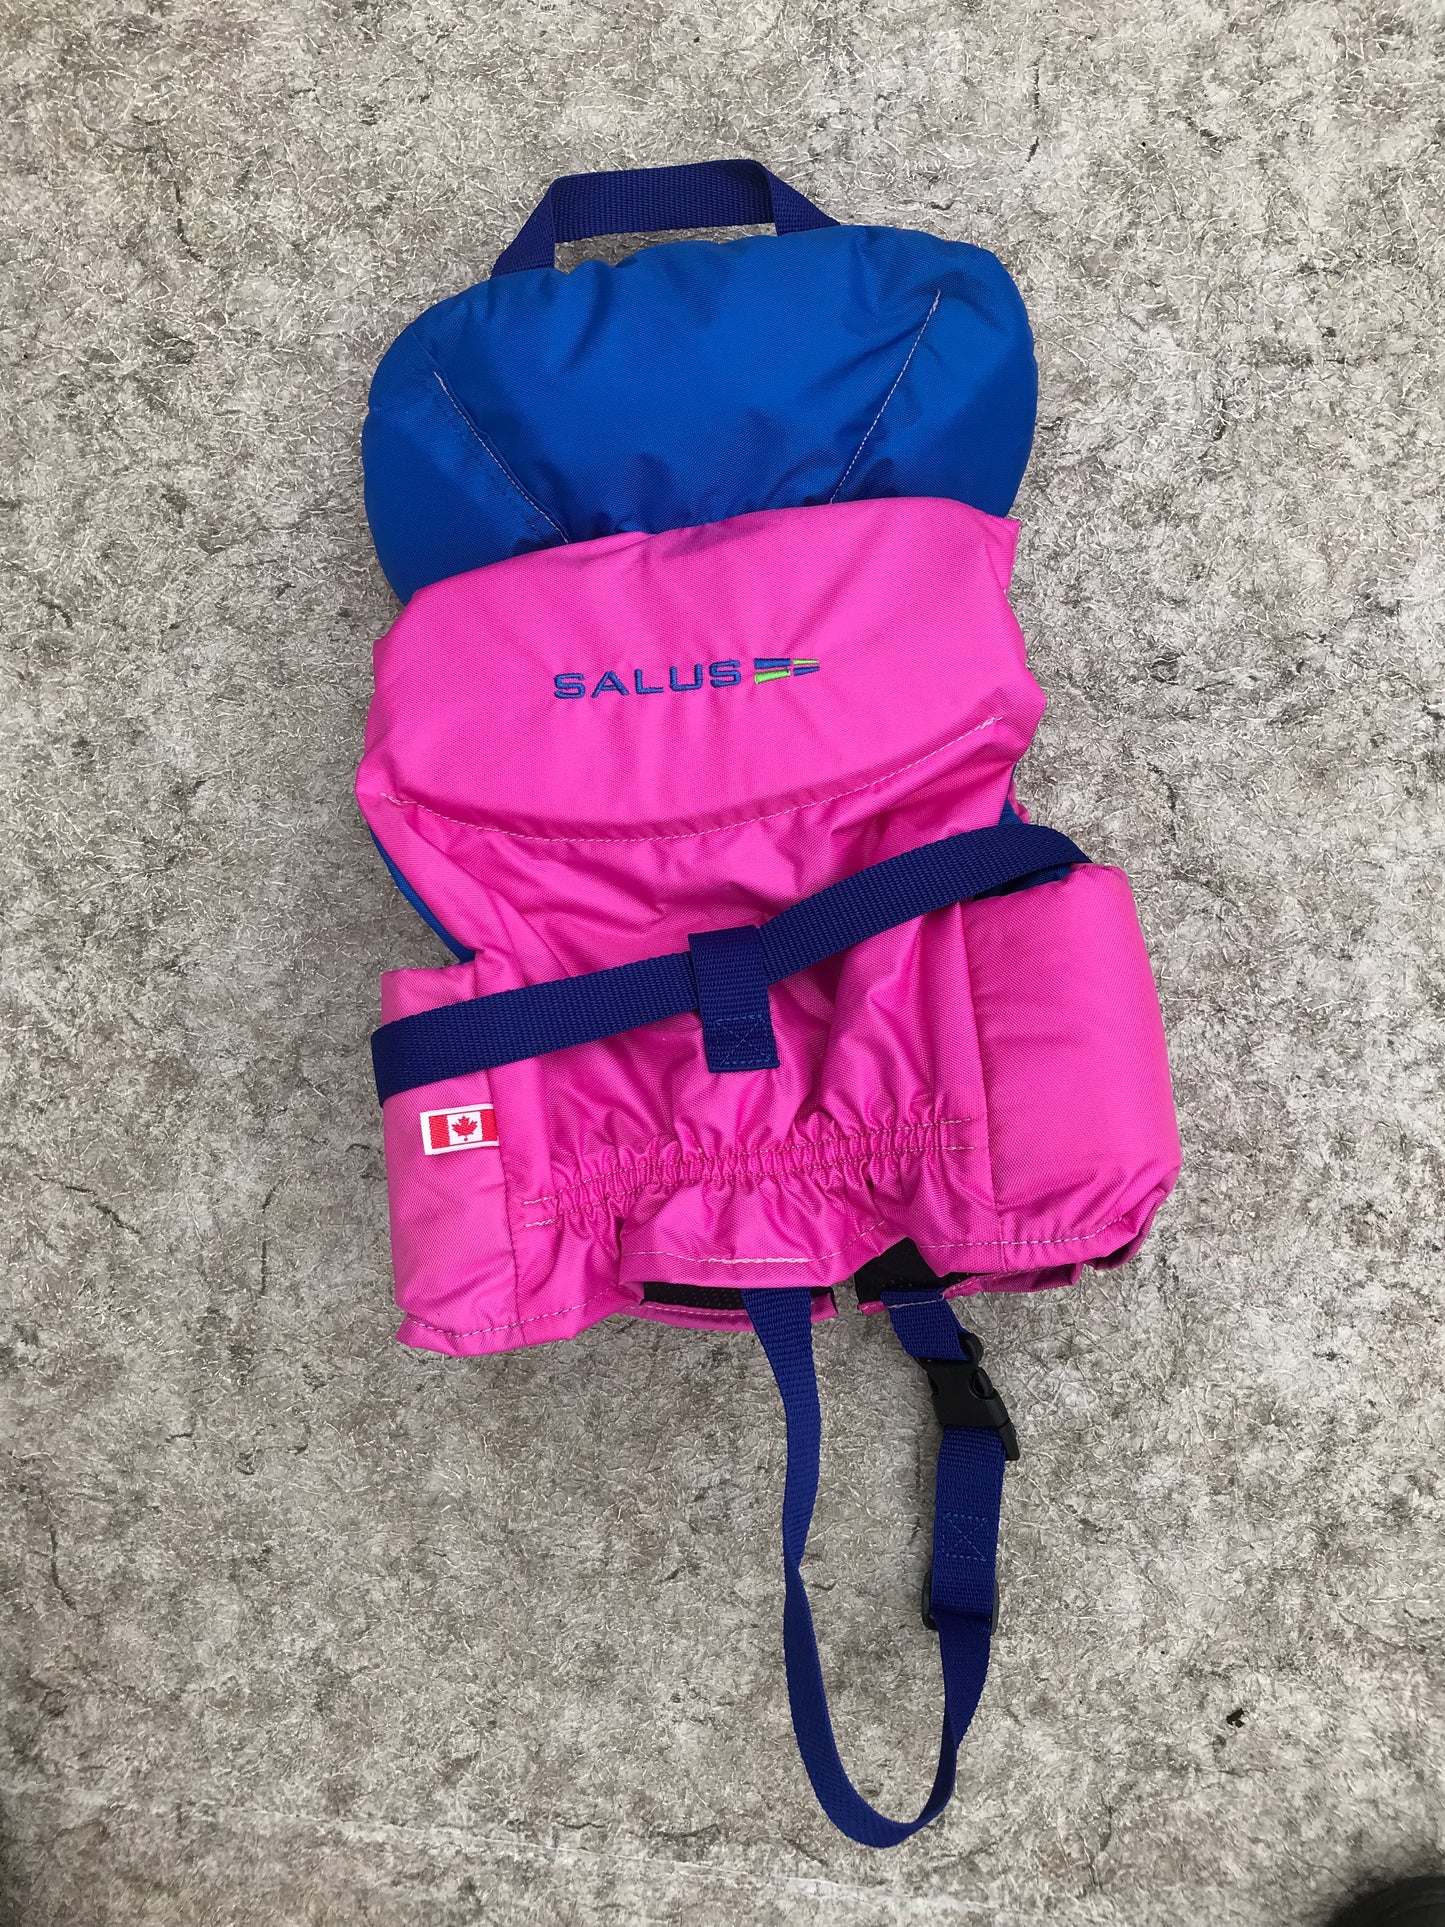 Life Jacket Child Size 20-30 lb Infant Salus Marine Wear Double Head Rest Pink Blue New Demo Model